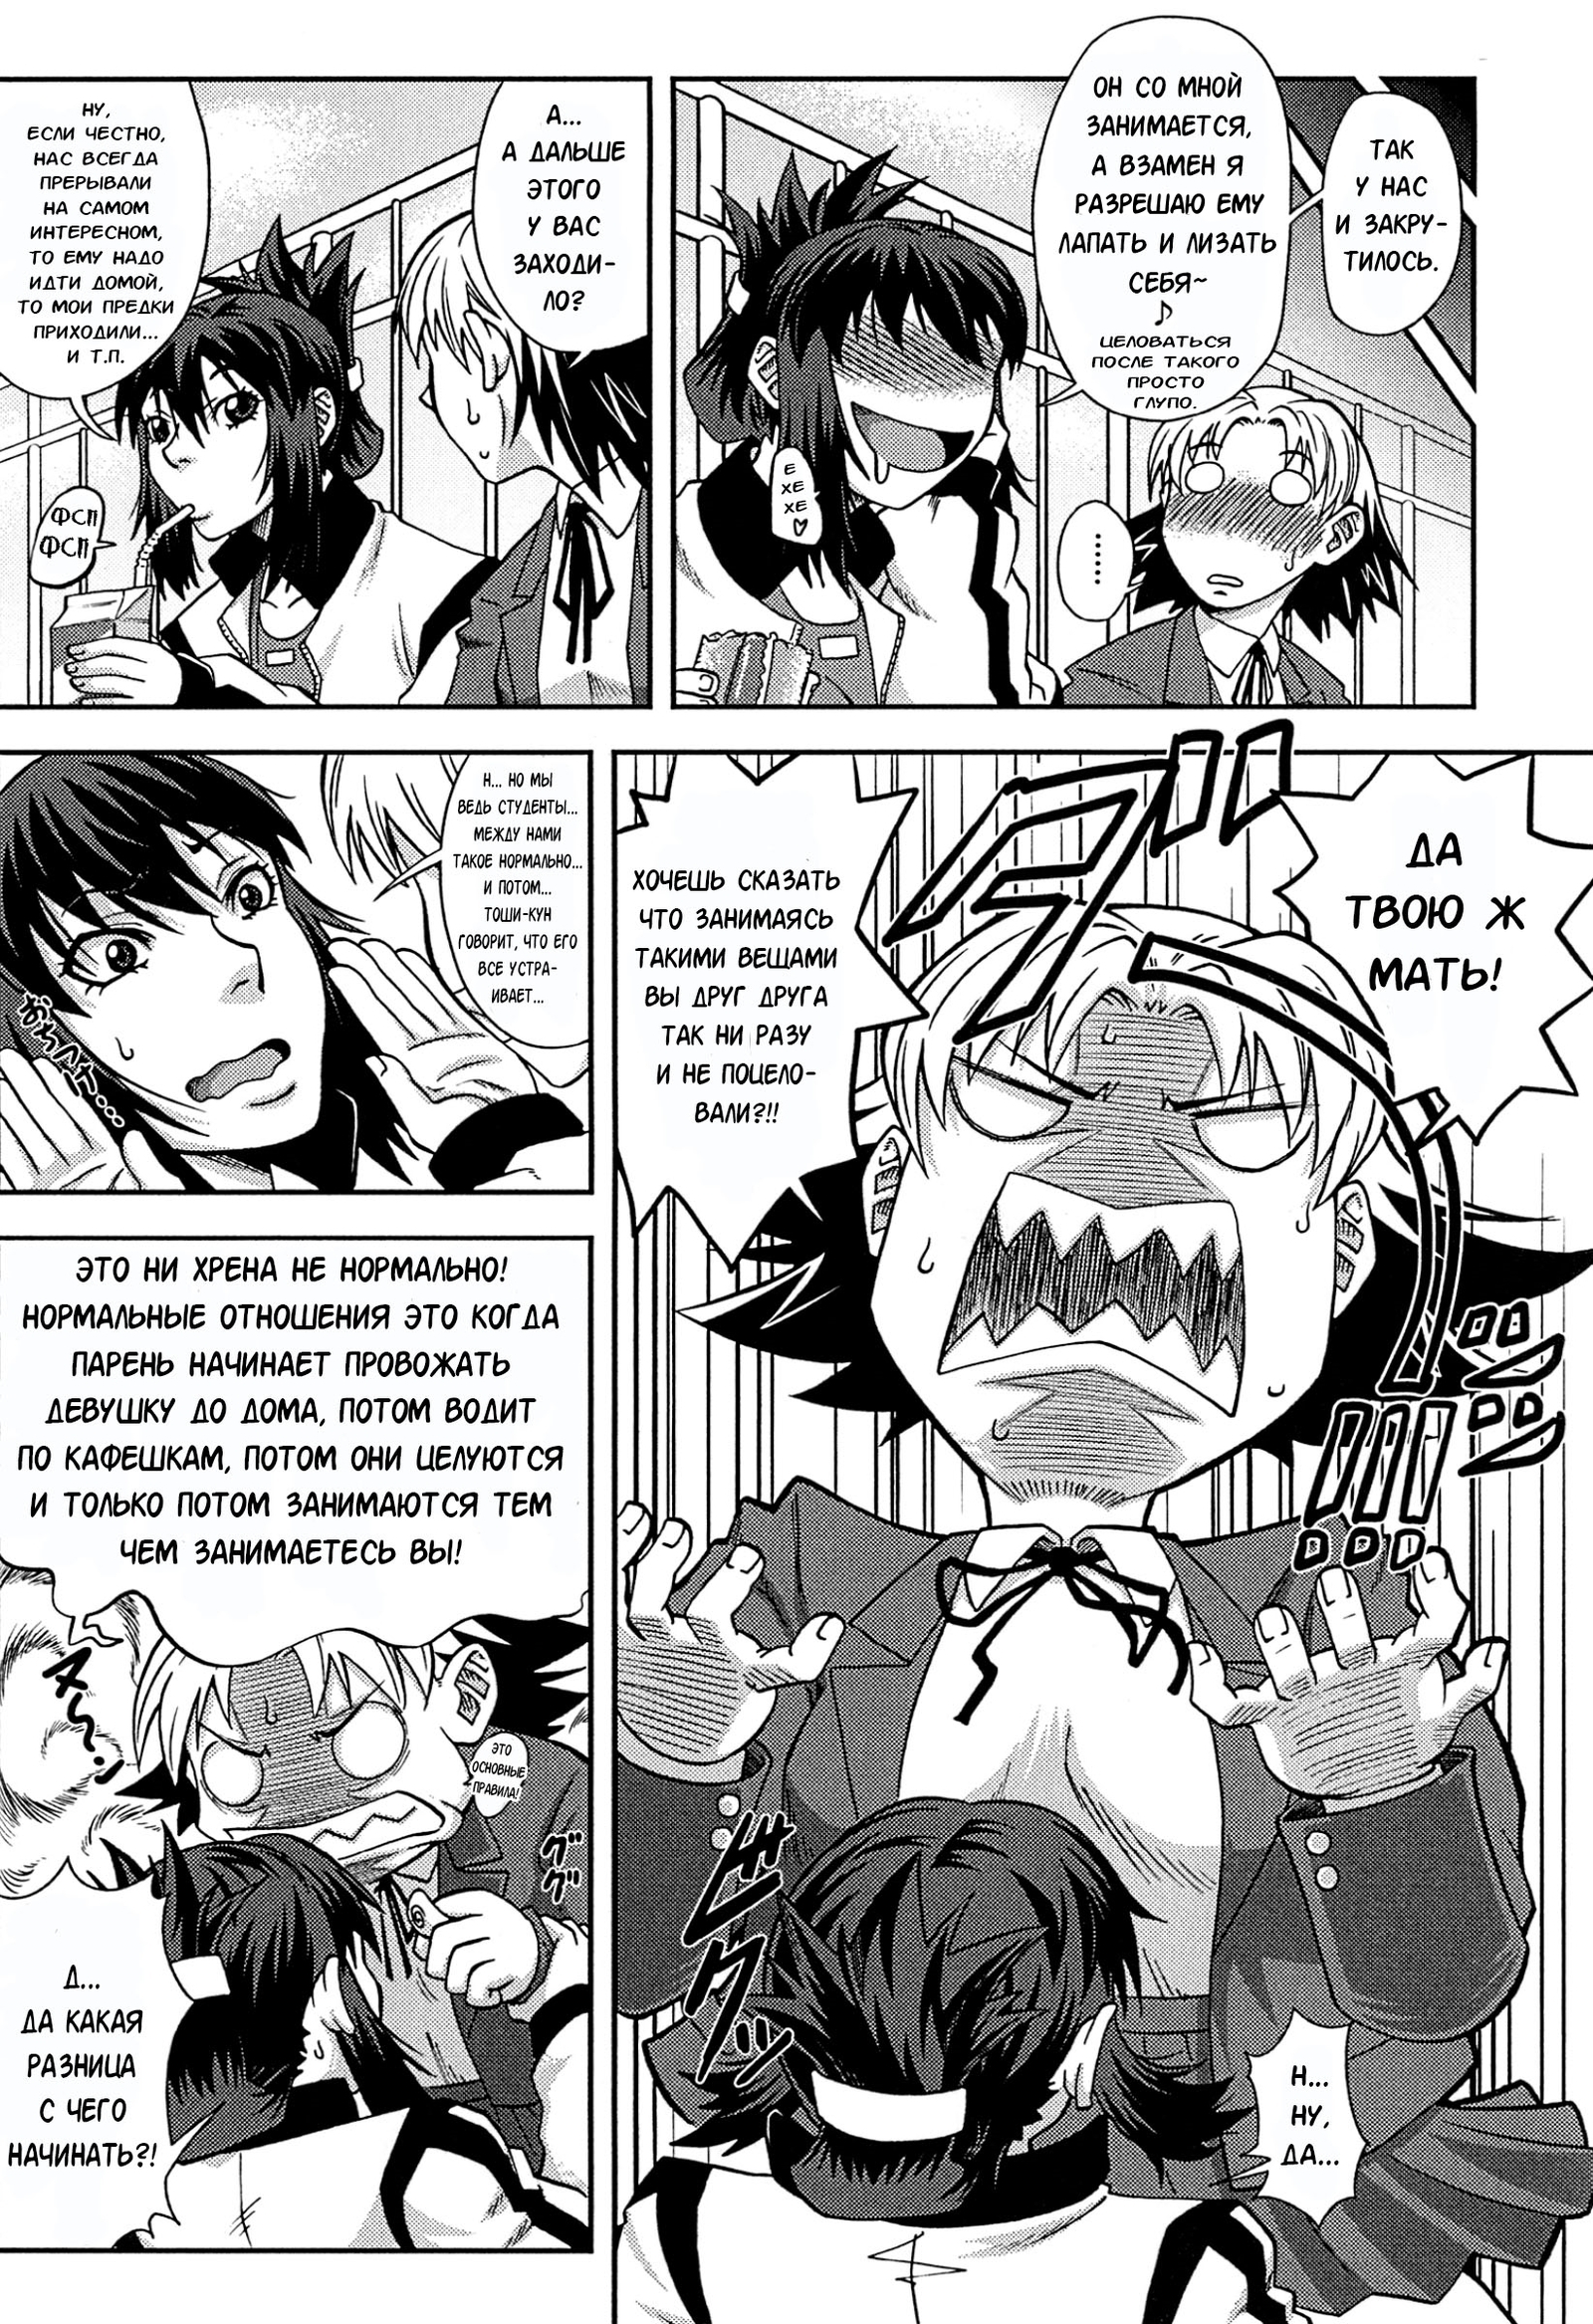 betty howse recommends watashi ga toriko manga pic